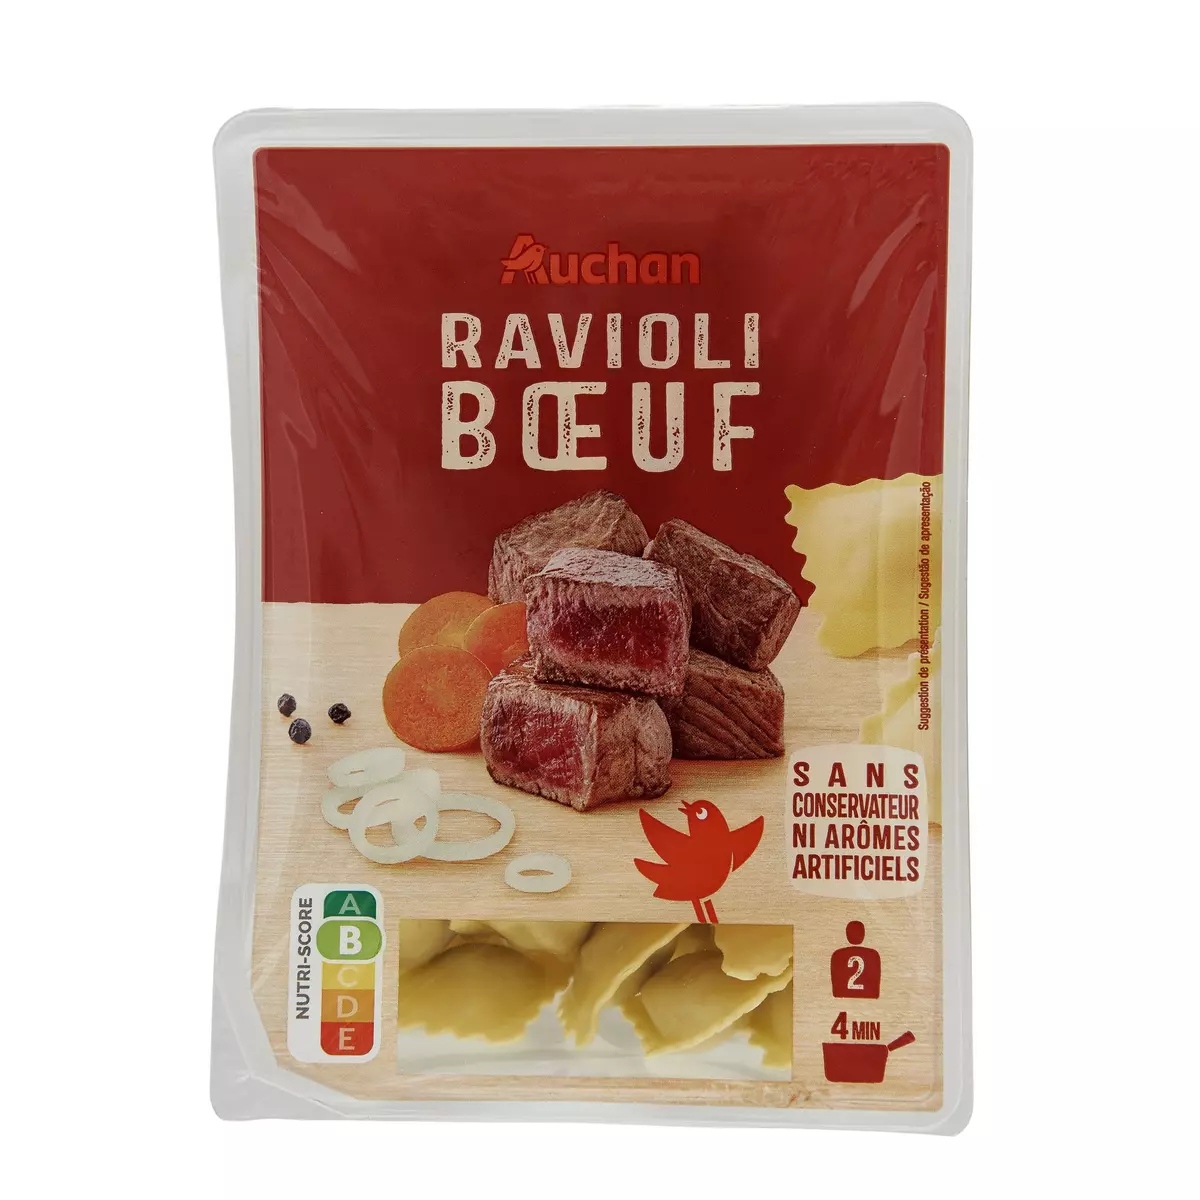 AUCHAN Ravioli au boeuf 2 portions 300g